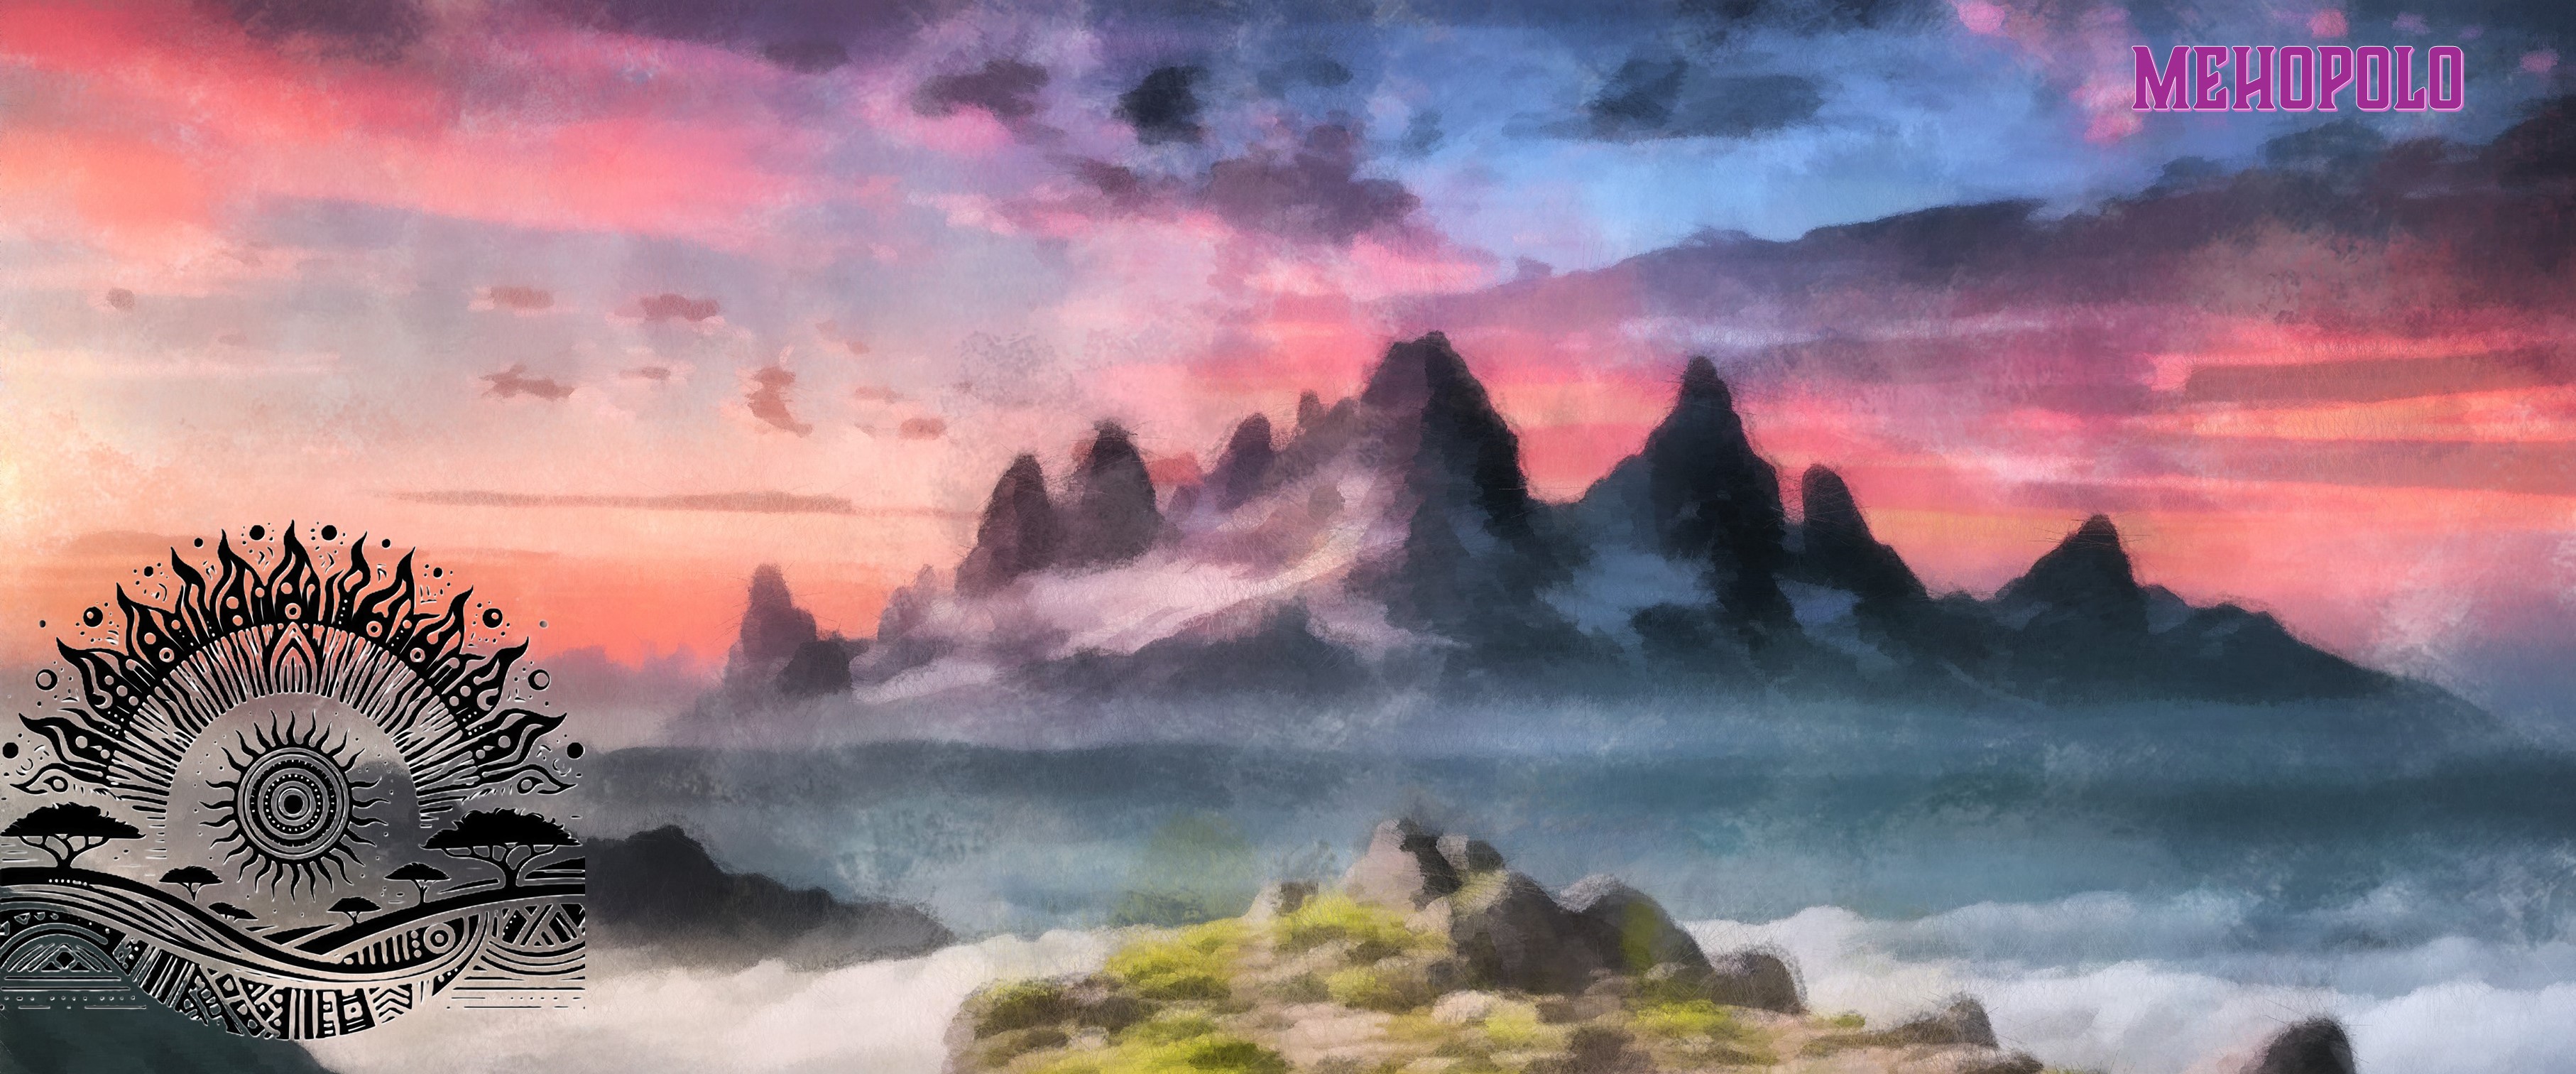 70 FREE!! Digital Watercolor Paintings - Mountain Scenes 🌄